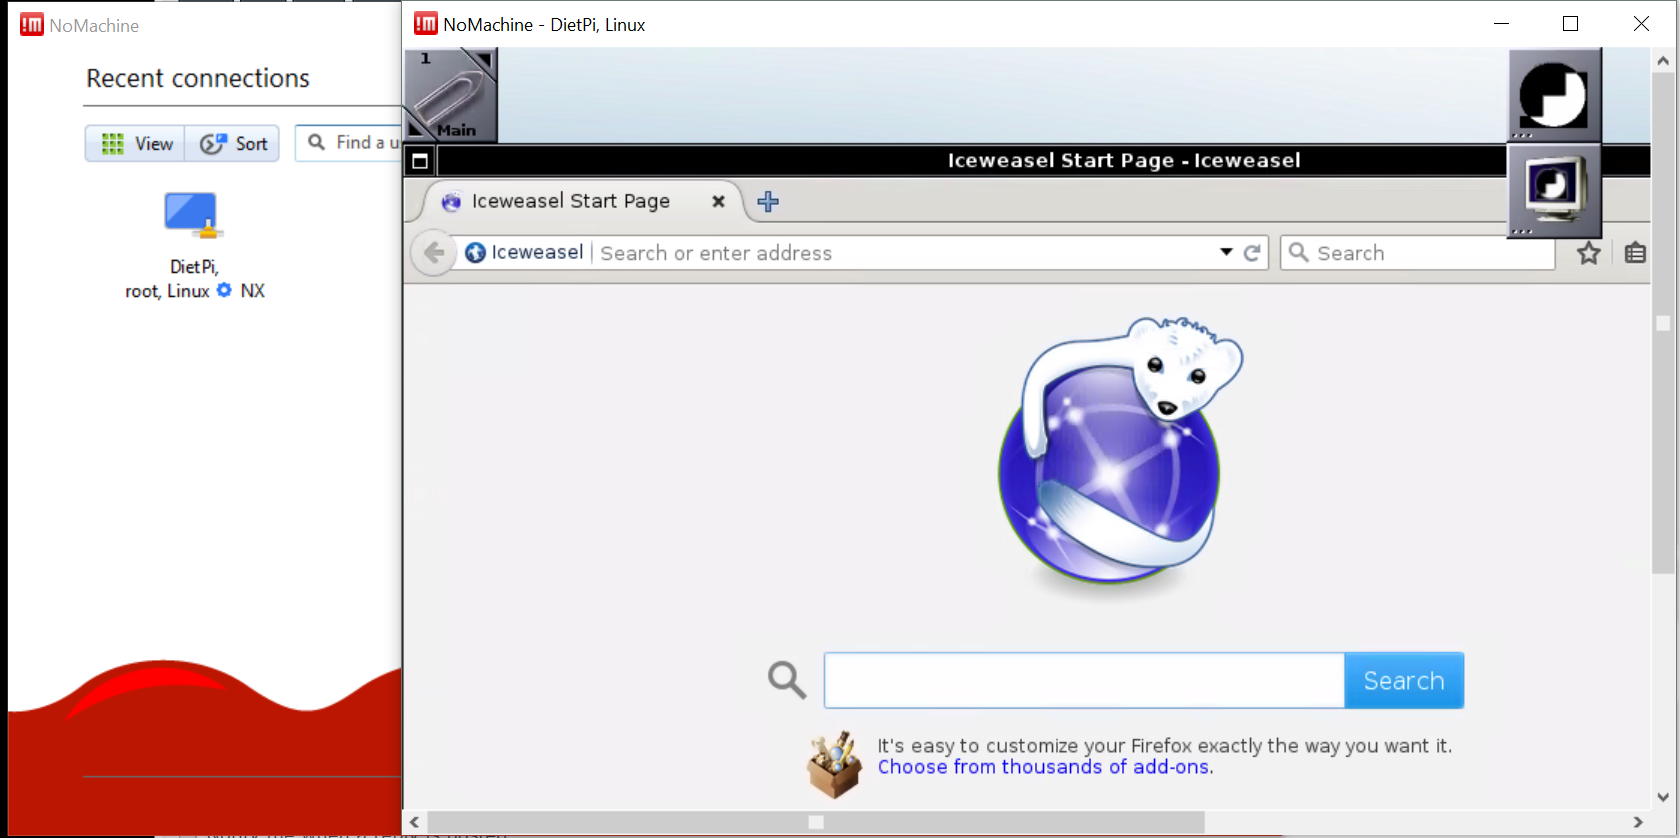 NoMachine client and desktop screenshot